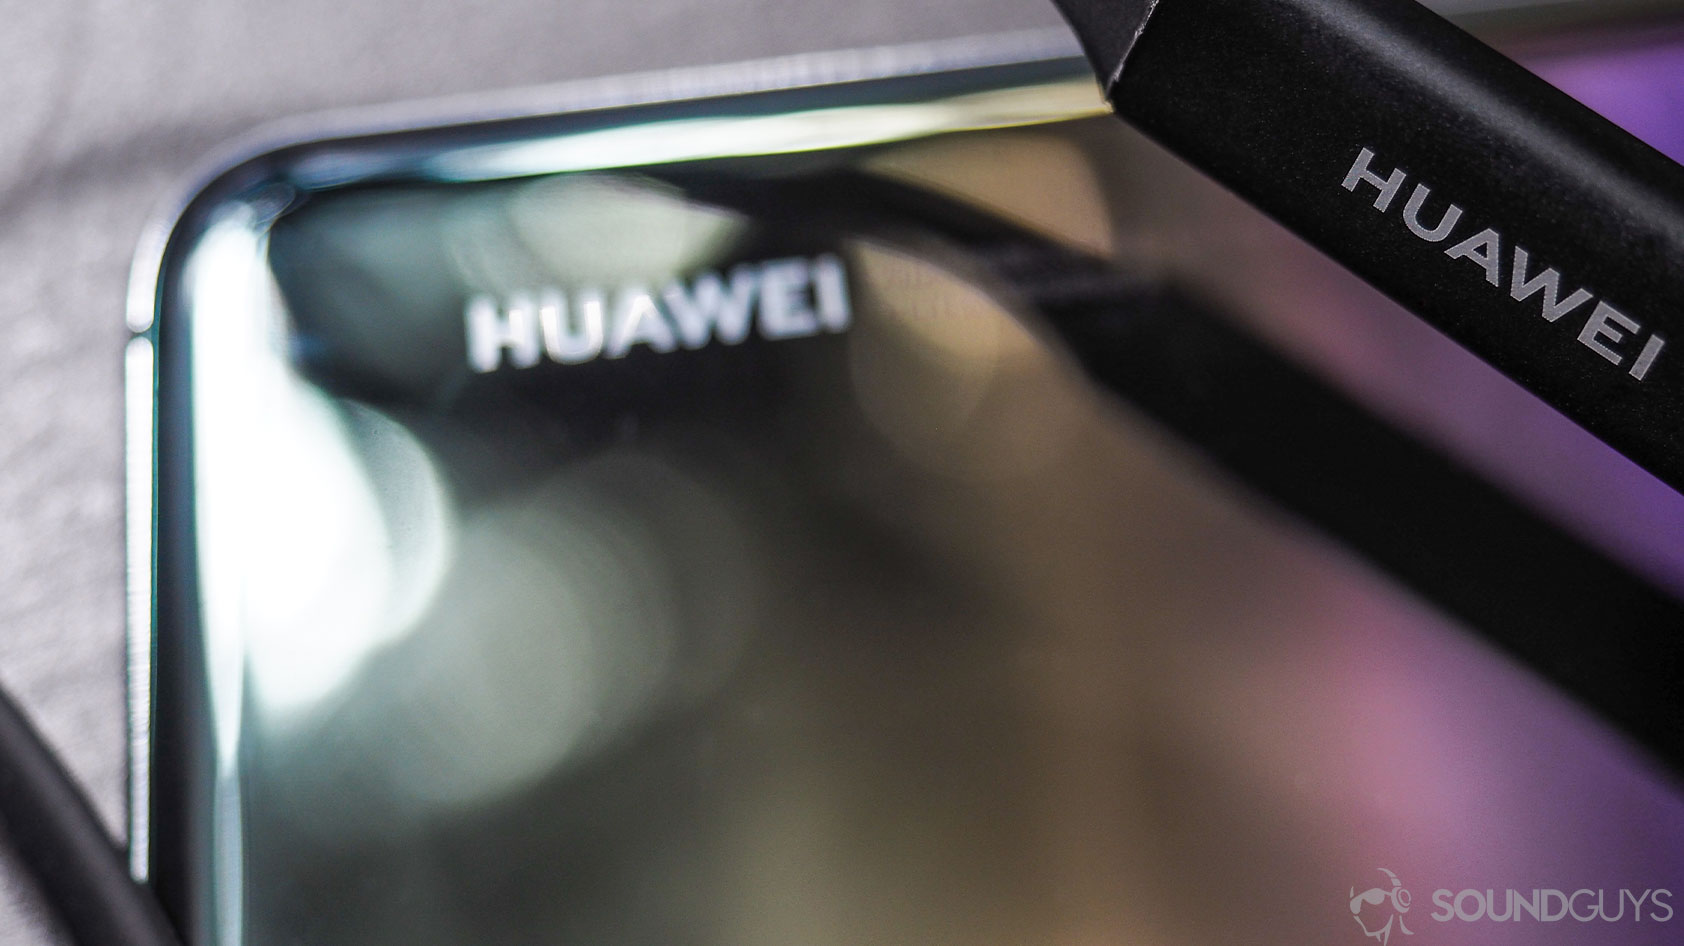 Huawei Freelace: Close-up of the Huawei logo on the phone and on the neckband of the FreeLace earbuds.